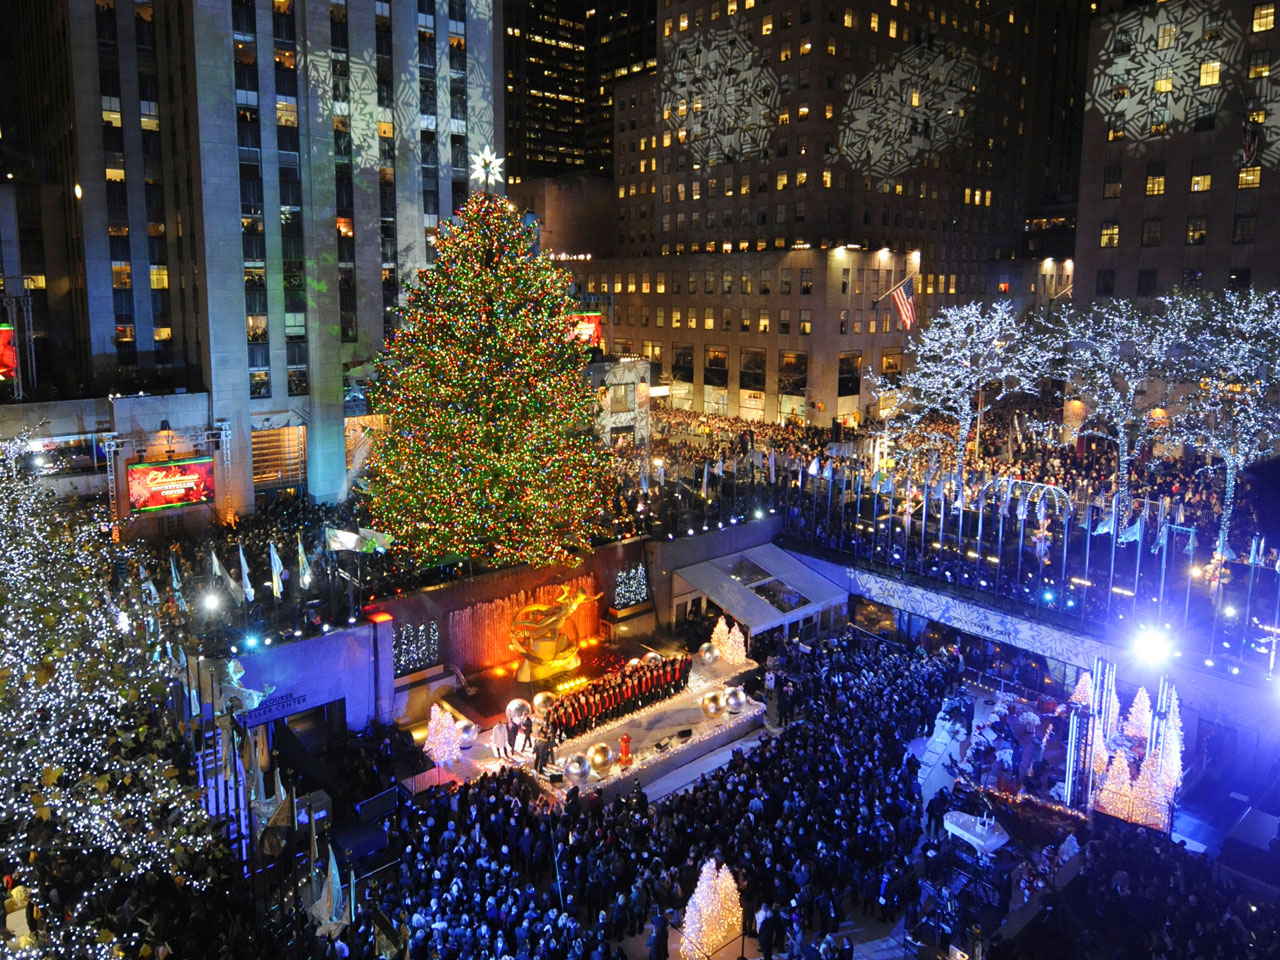 The Rockefeller Center Christmas tree lights up - CBS News